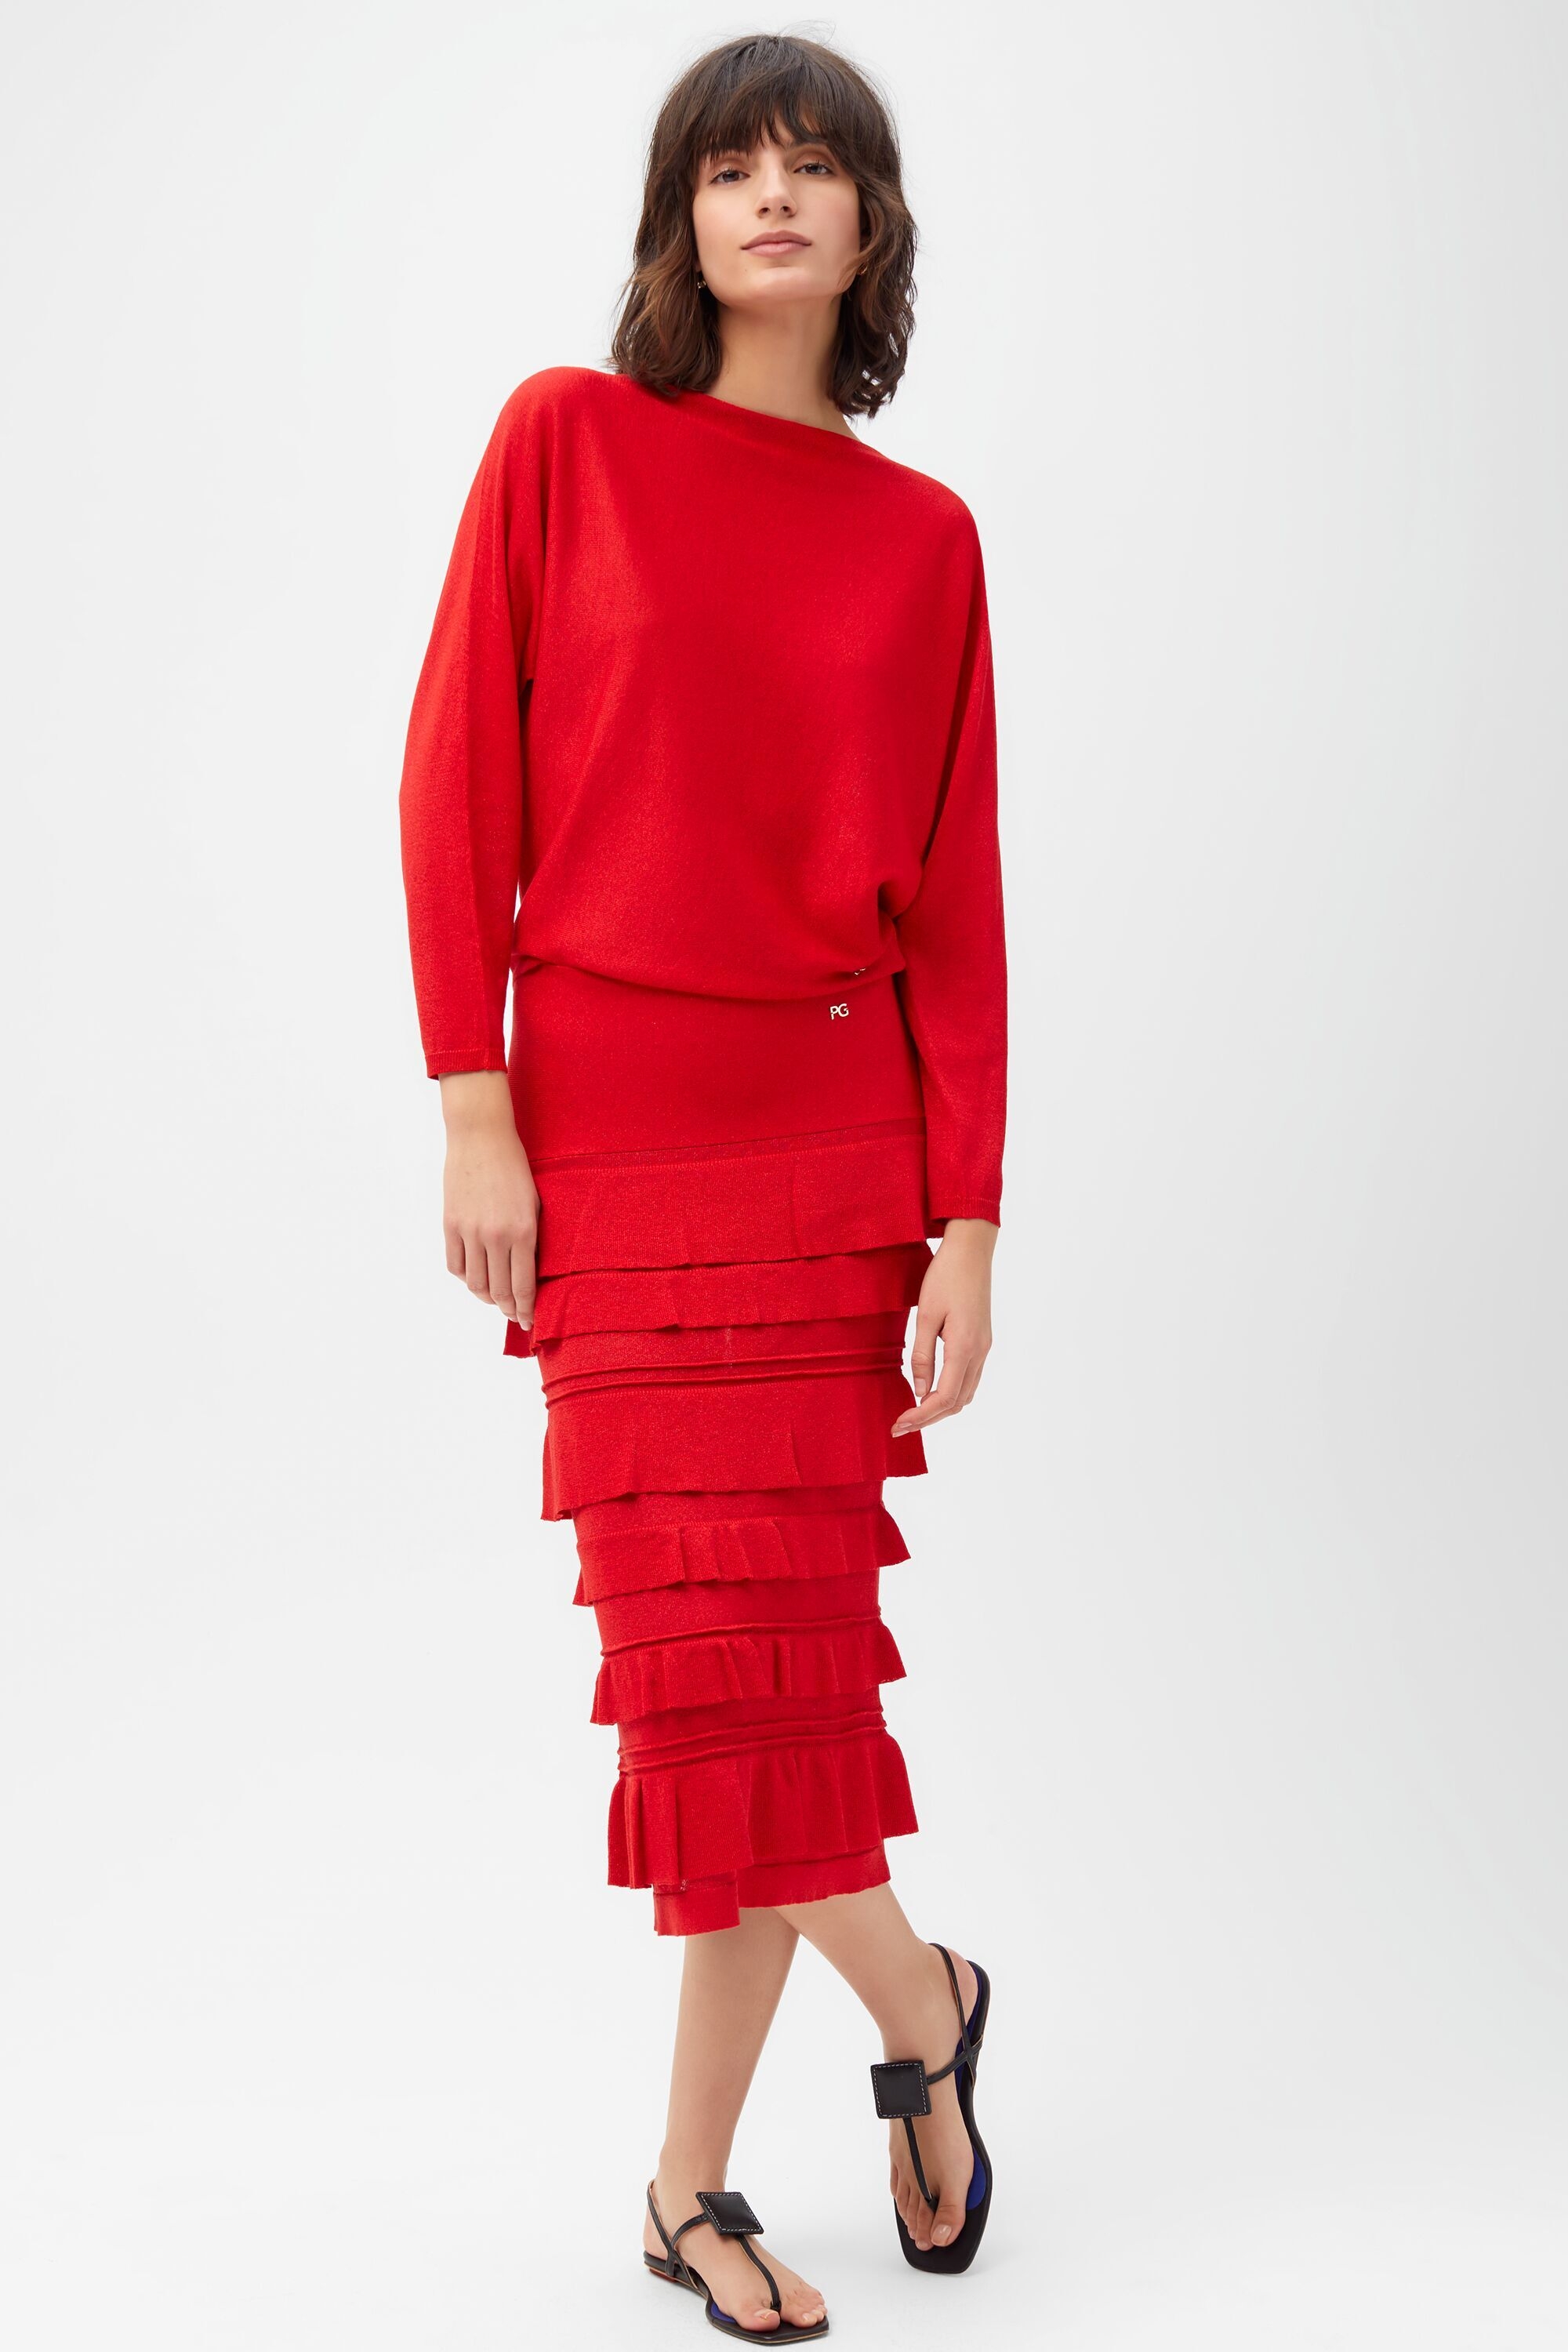 Tiered lurex knit pencil skirt